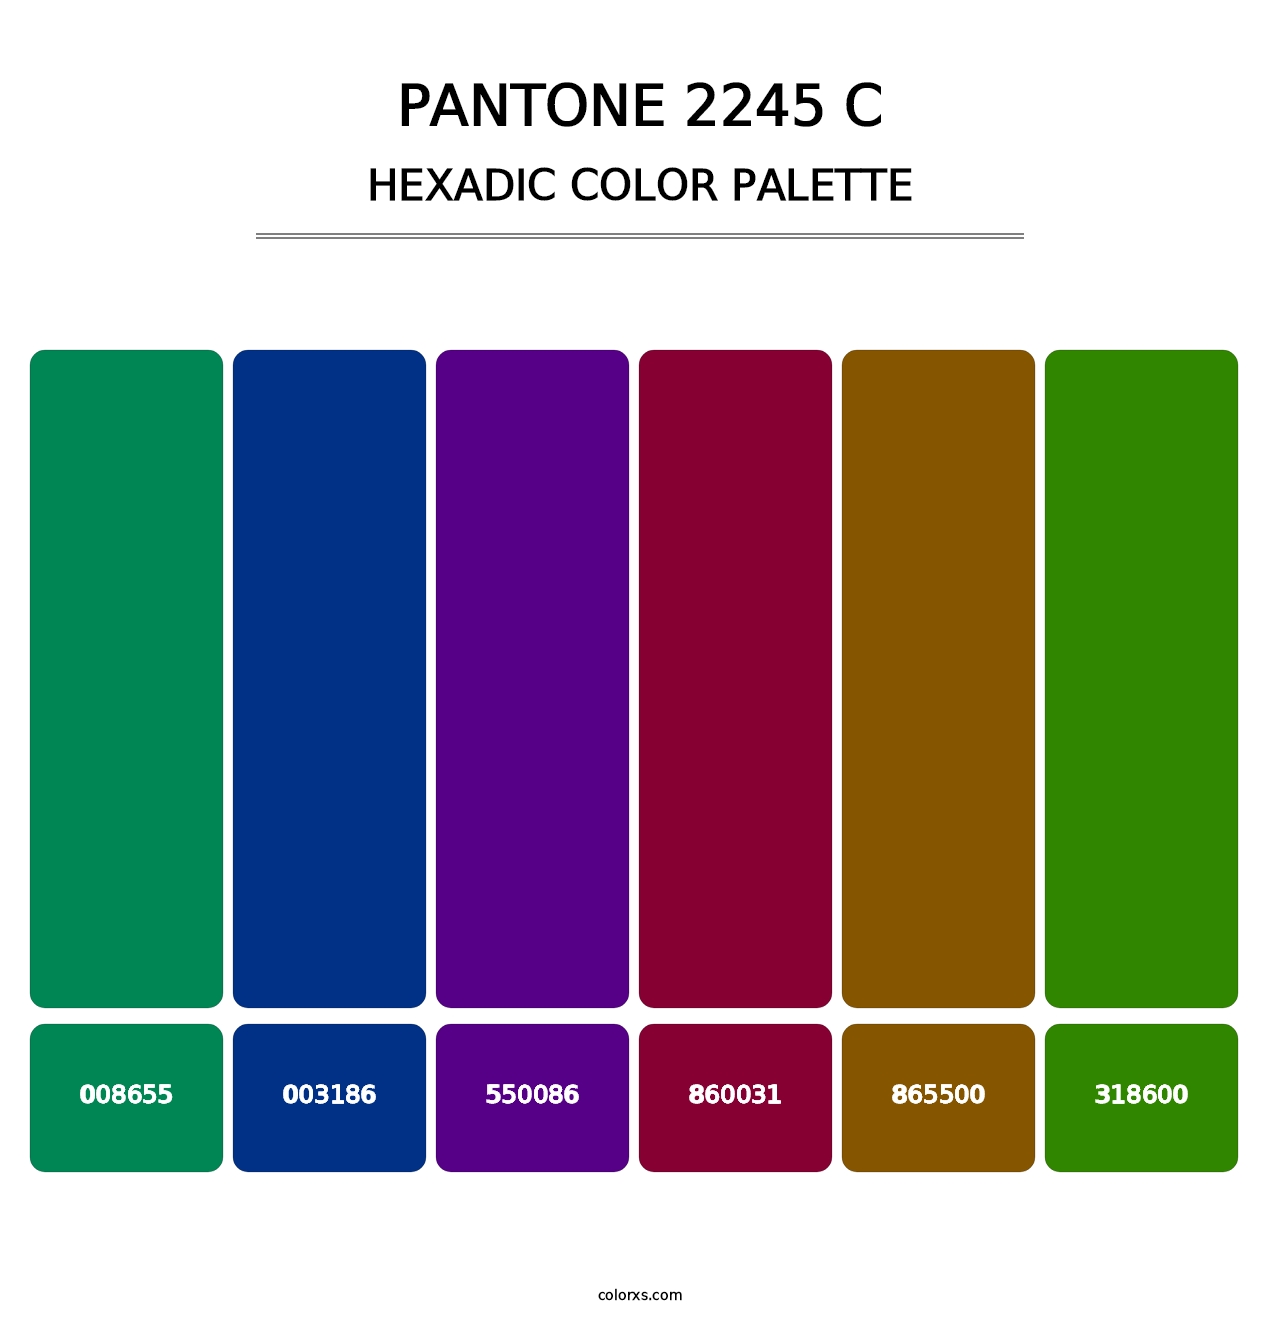 PANTONE 2245 C - Hexadic Color Palette